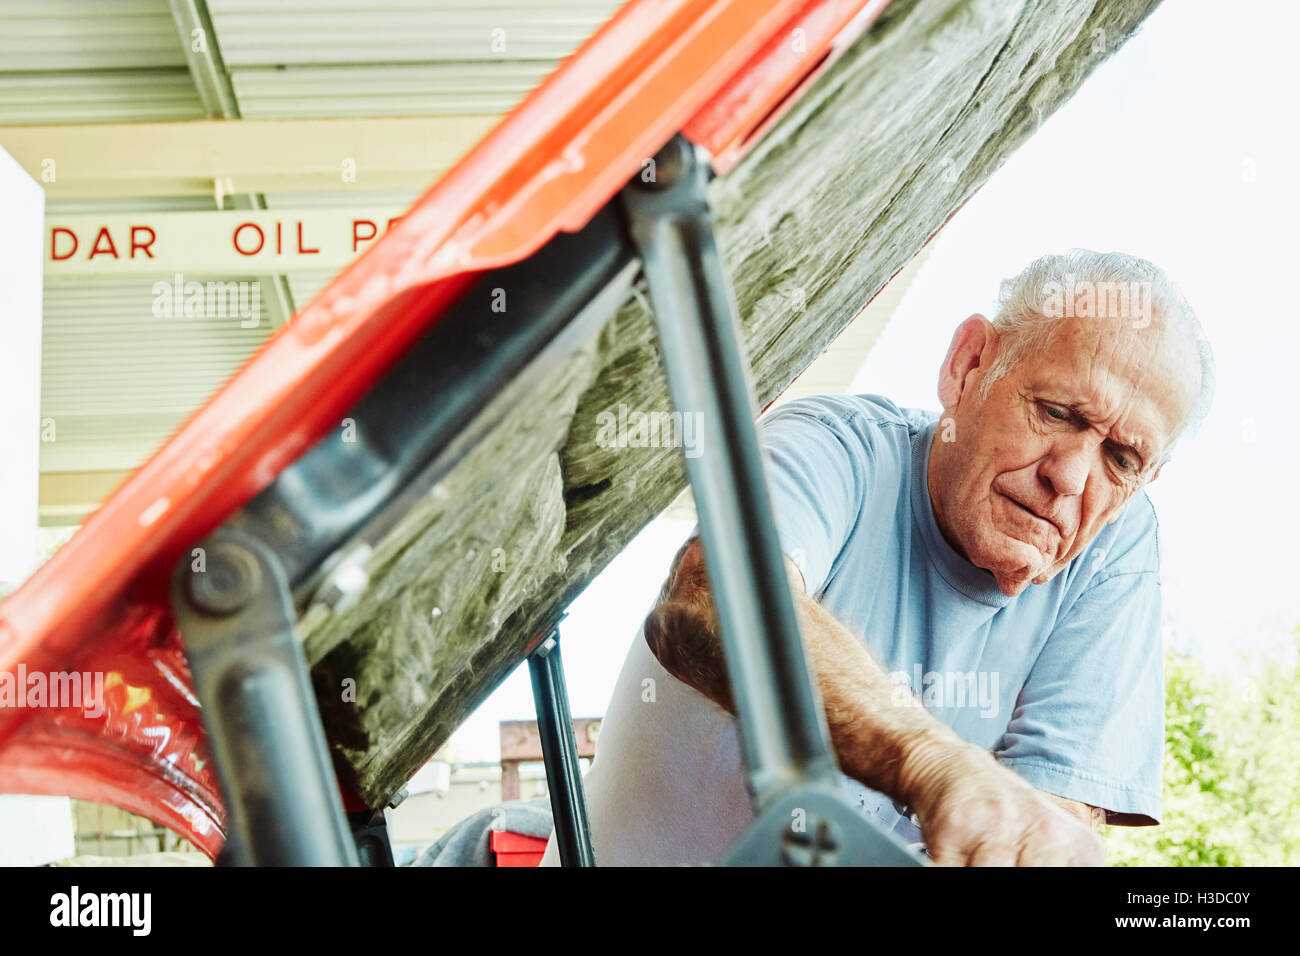 Senior man repairing a car, looking under bonnet. Stock Photo